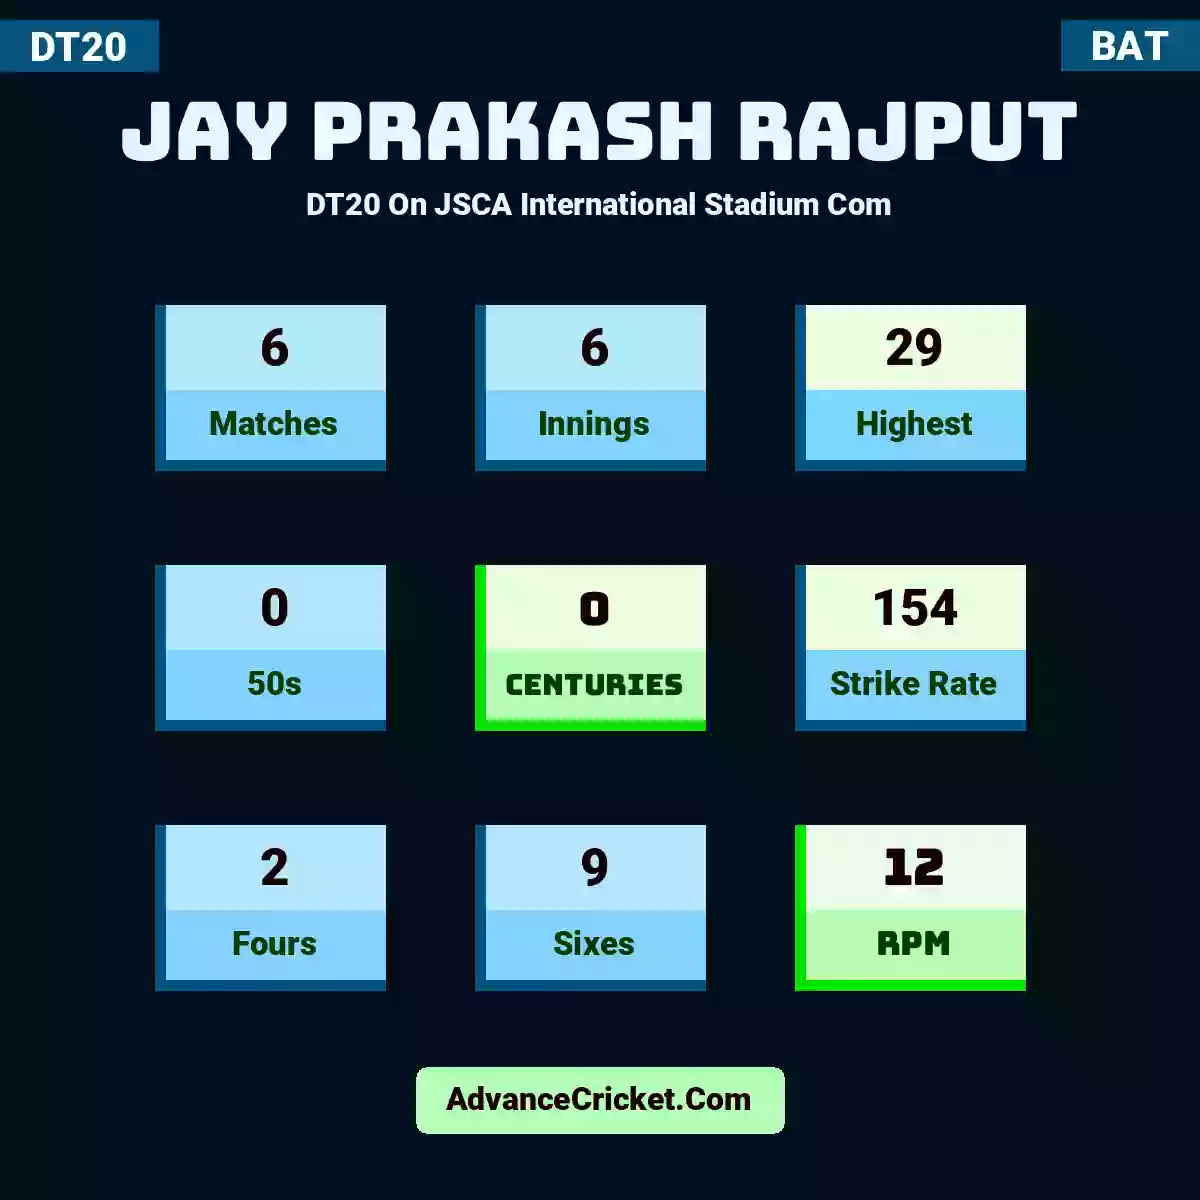 Jay Prakash Rajput DT20  On JSCA International Stadium Com, Jay Prakash Rajput played 6 matches, scored 29 runs as highest, 0 half-centuries, and 0 centuries, with a strike rate of 154. J.Prakash.Rajput hit 2 fours and 9 sixes, with an RPM of 12.